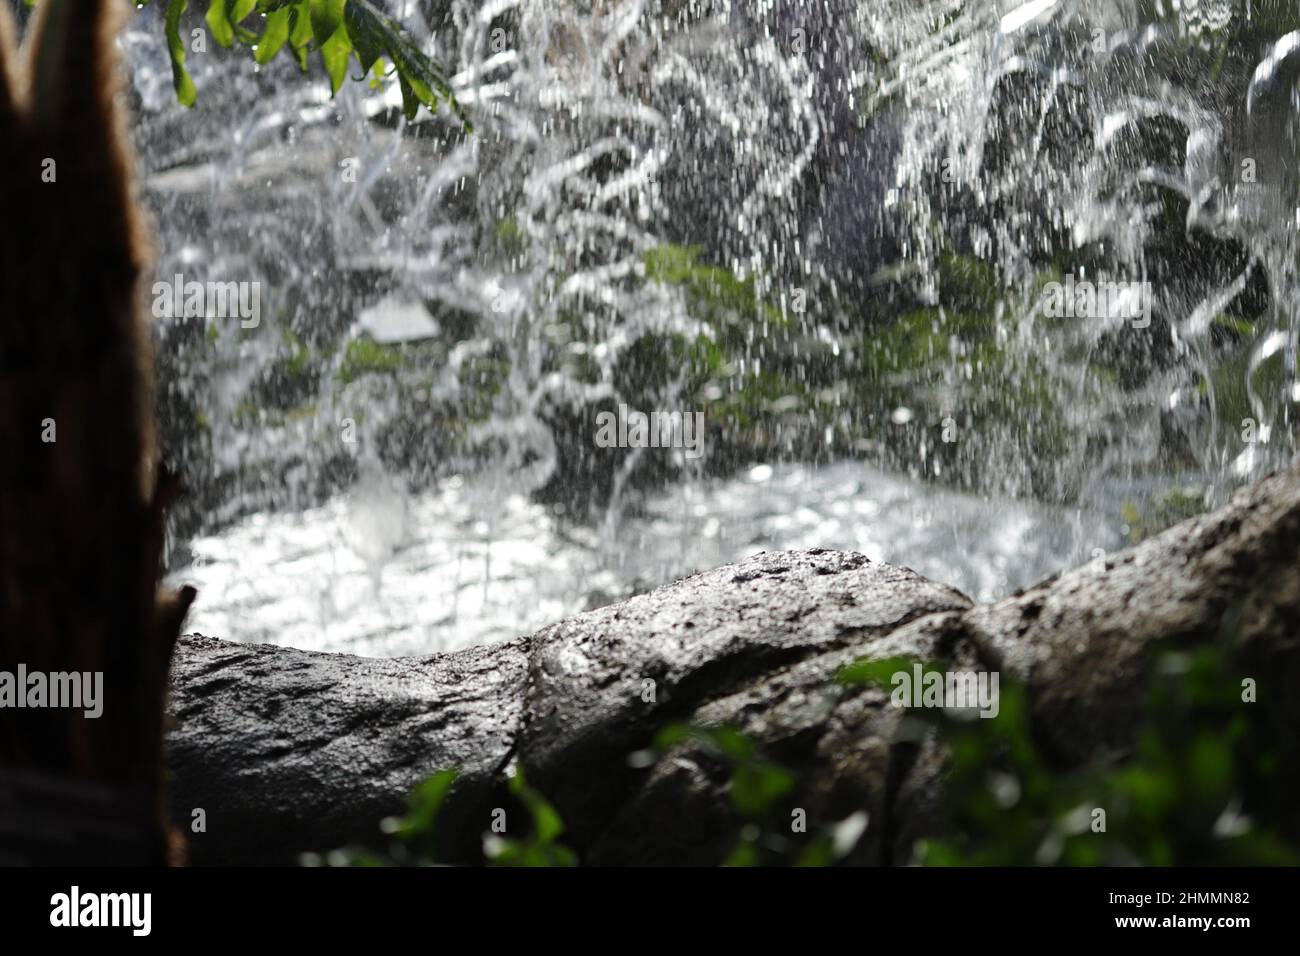 Cascading Water, Humid Rock near Falls and Vegetation Stock Photo